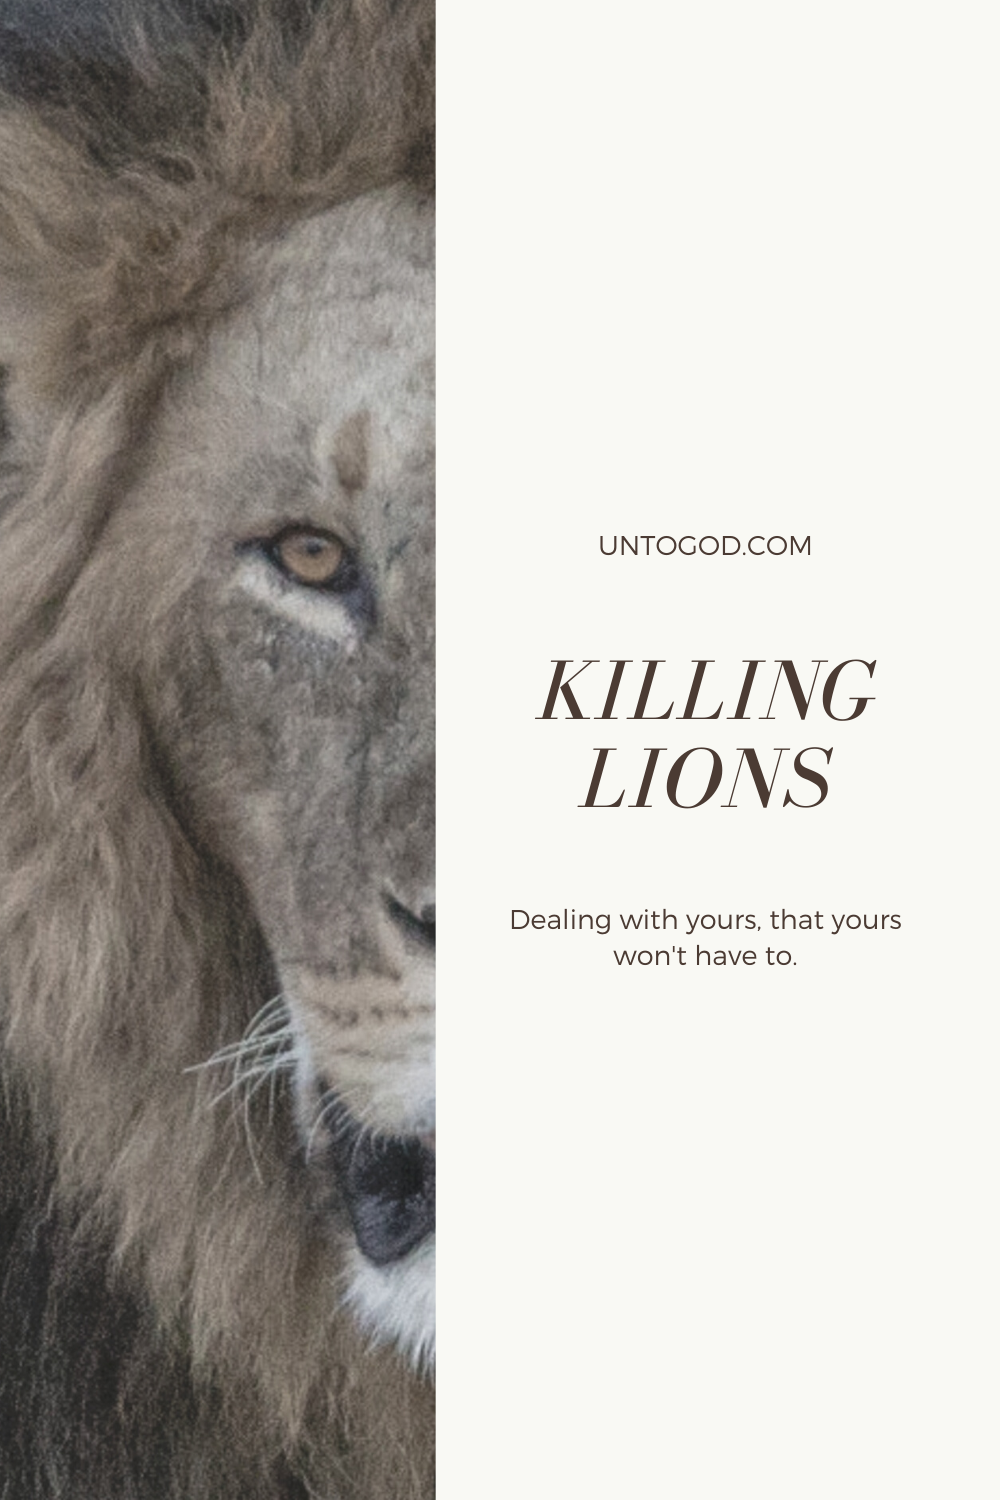 Killing Lions